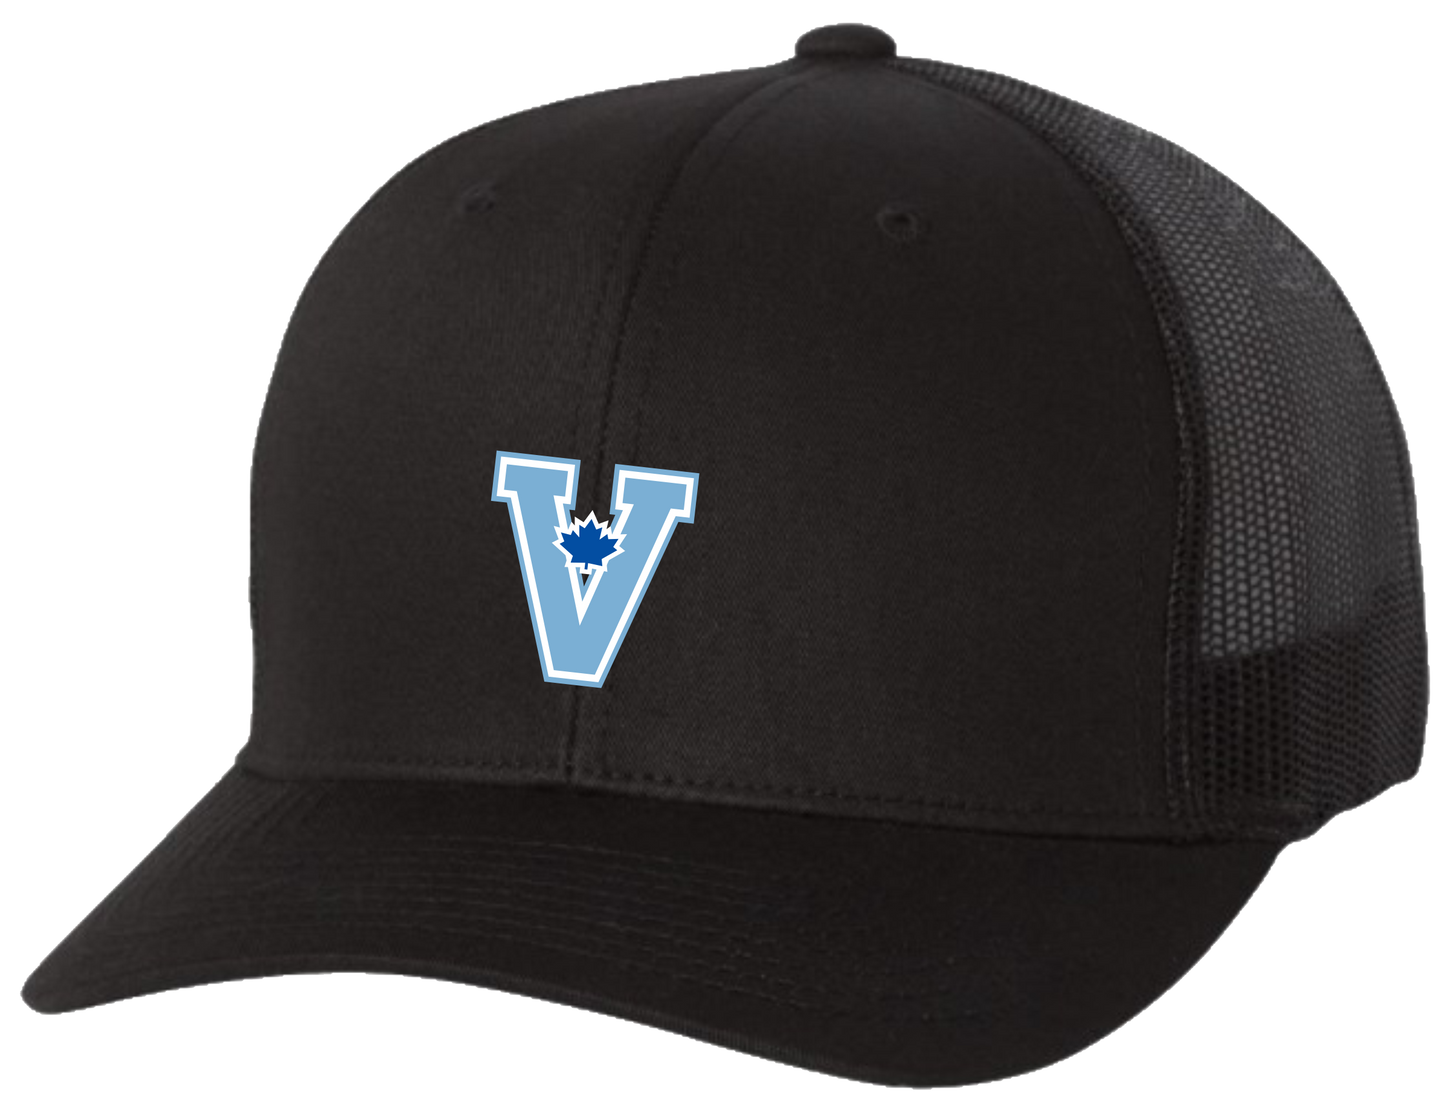 Glory Softball Trucker Hats